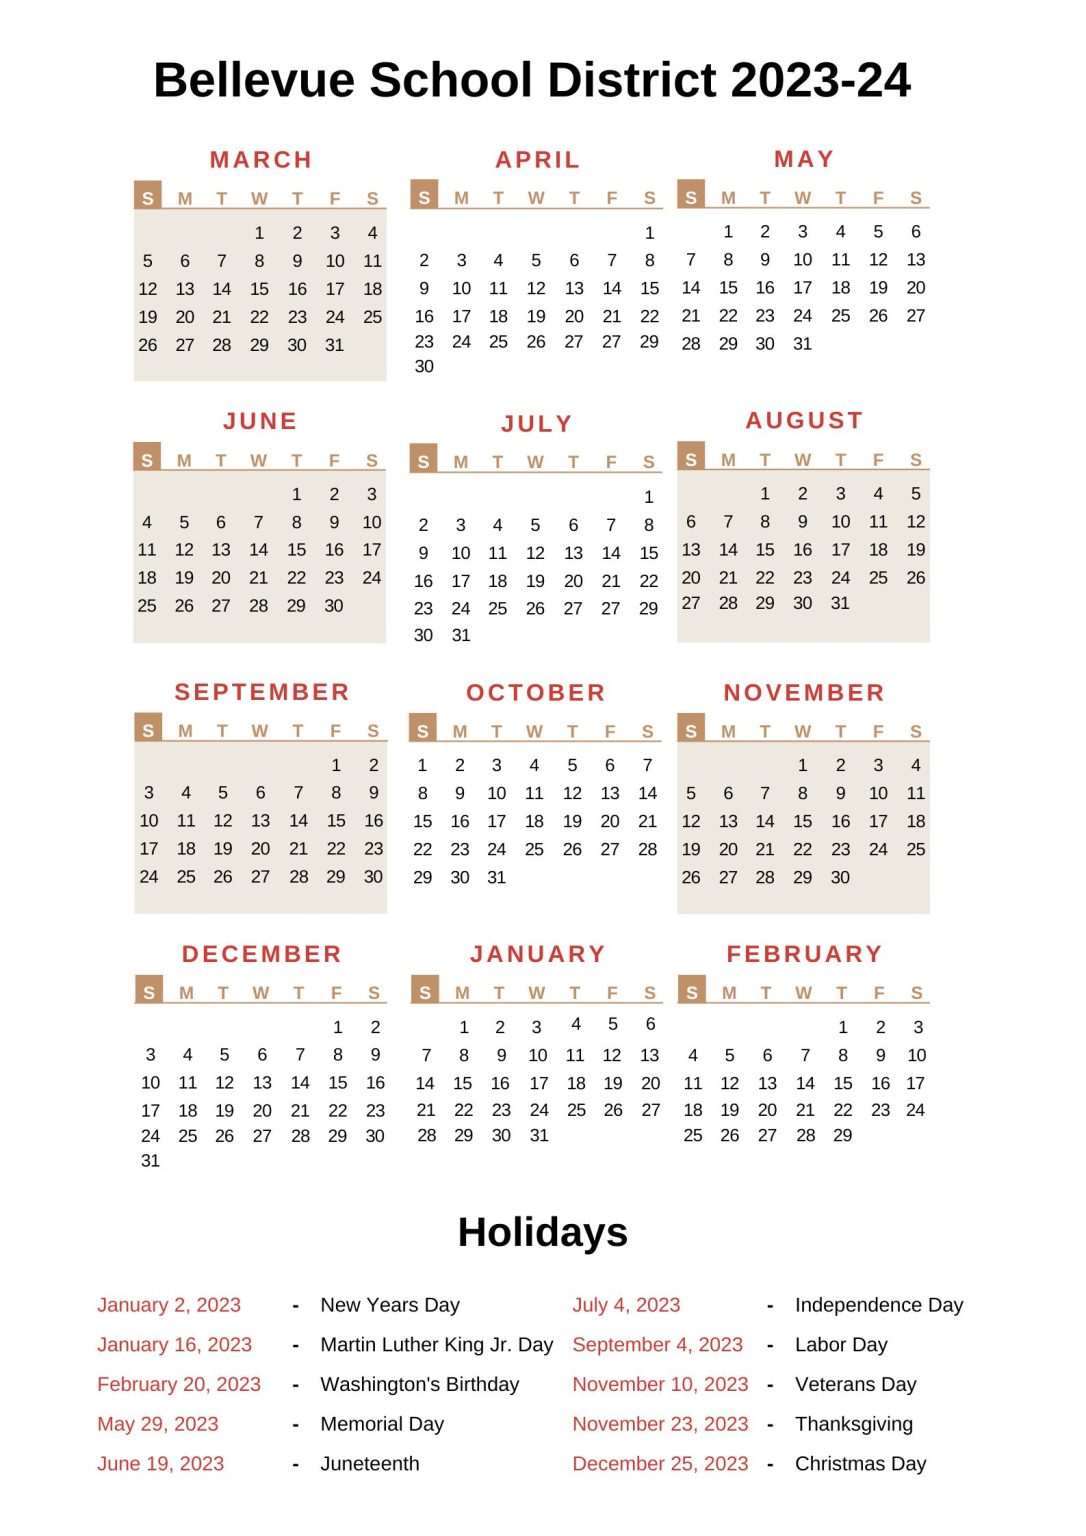 Bellevue School District Calendar 2023 24 With Holidays